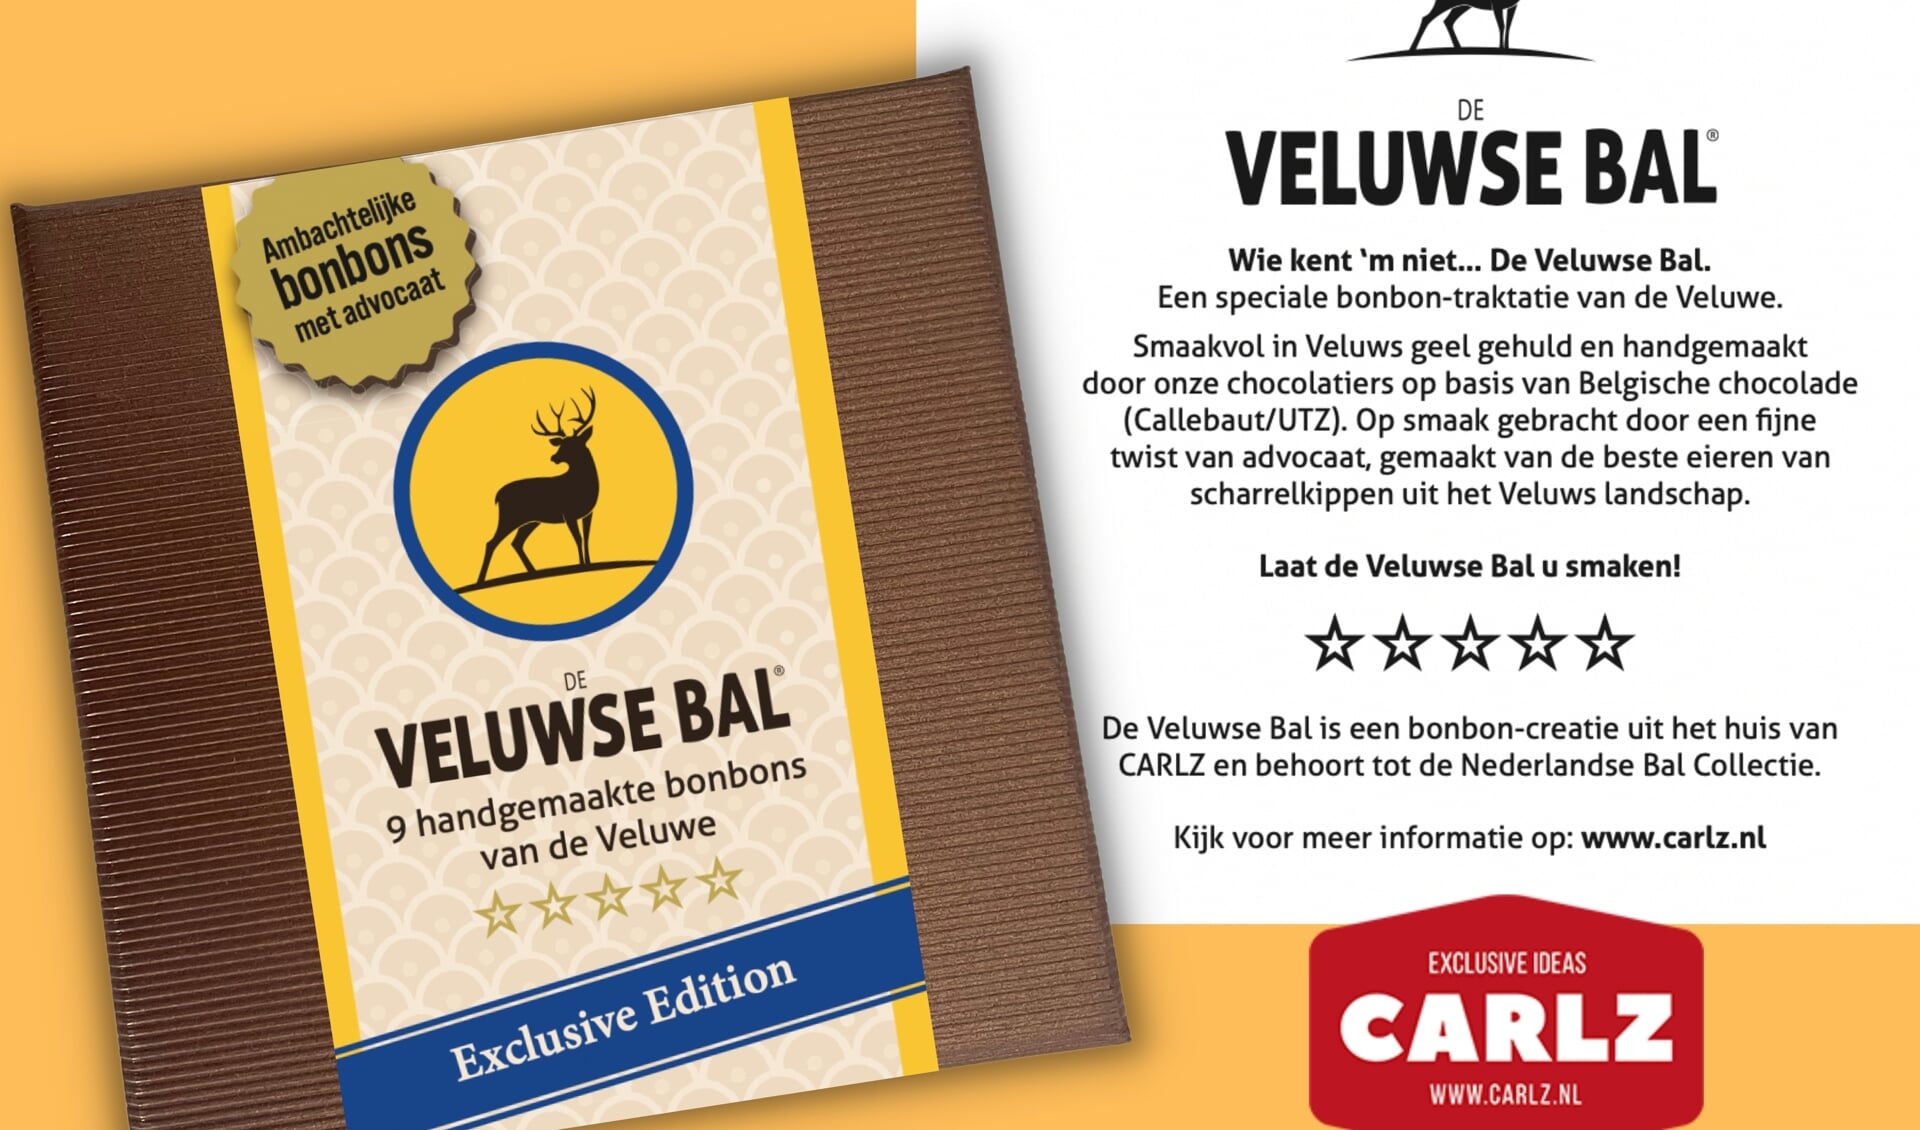 De Veluwse Bal, de nieuwe bonbon van de Veluwe.